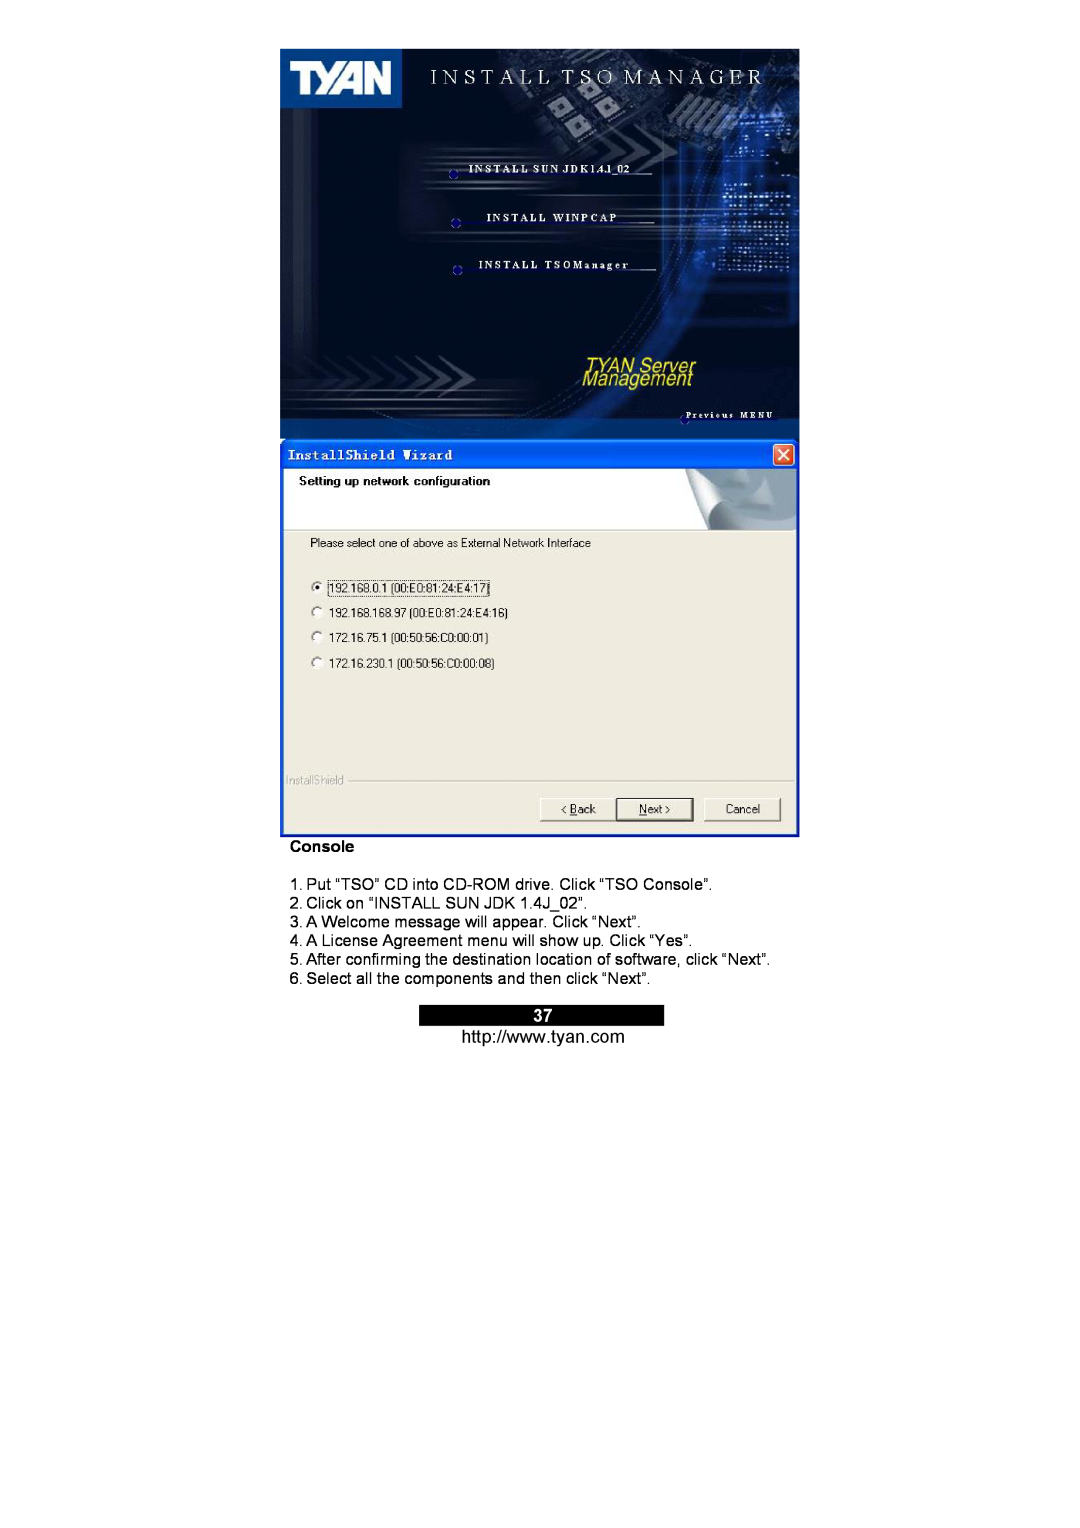 Tyan Computer M3291, M3295 Put “TSO” CD into CD-ROM drive. Click “TSO Console”, Click on “INSTALL SUN JDK 1.4J02” 